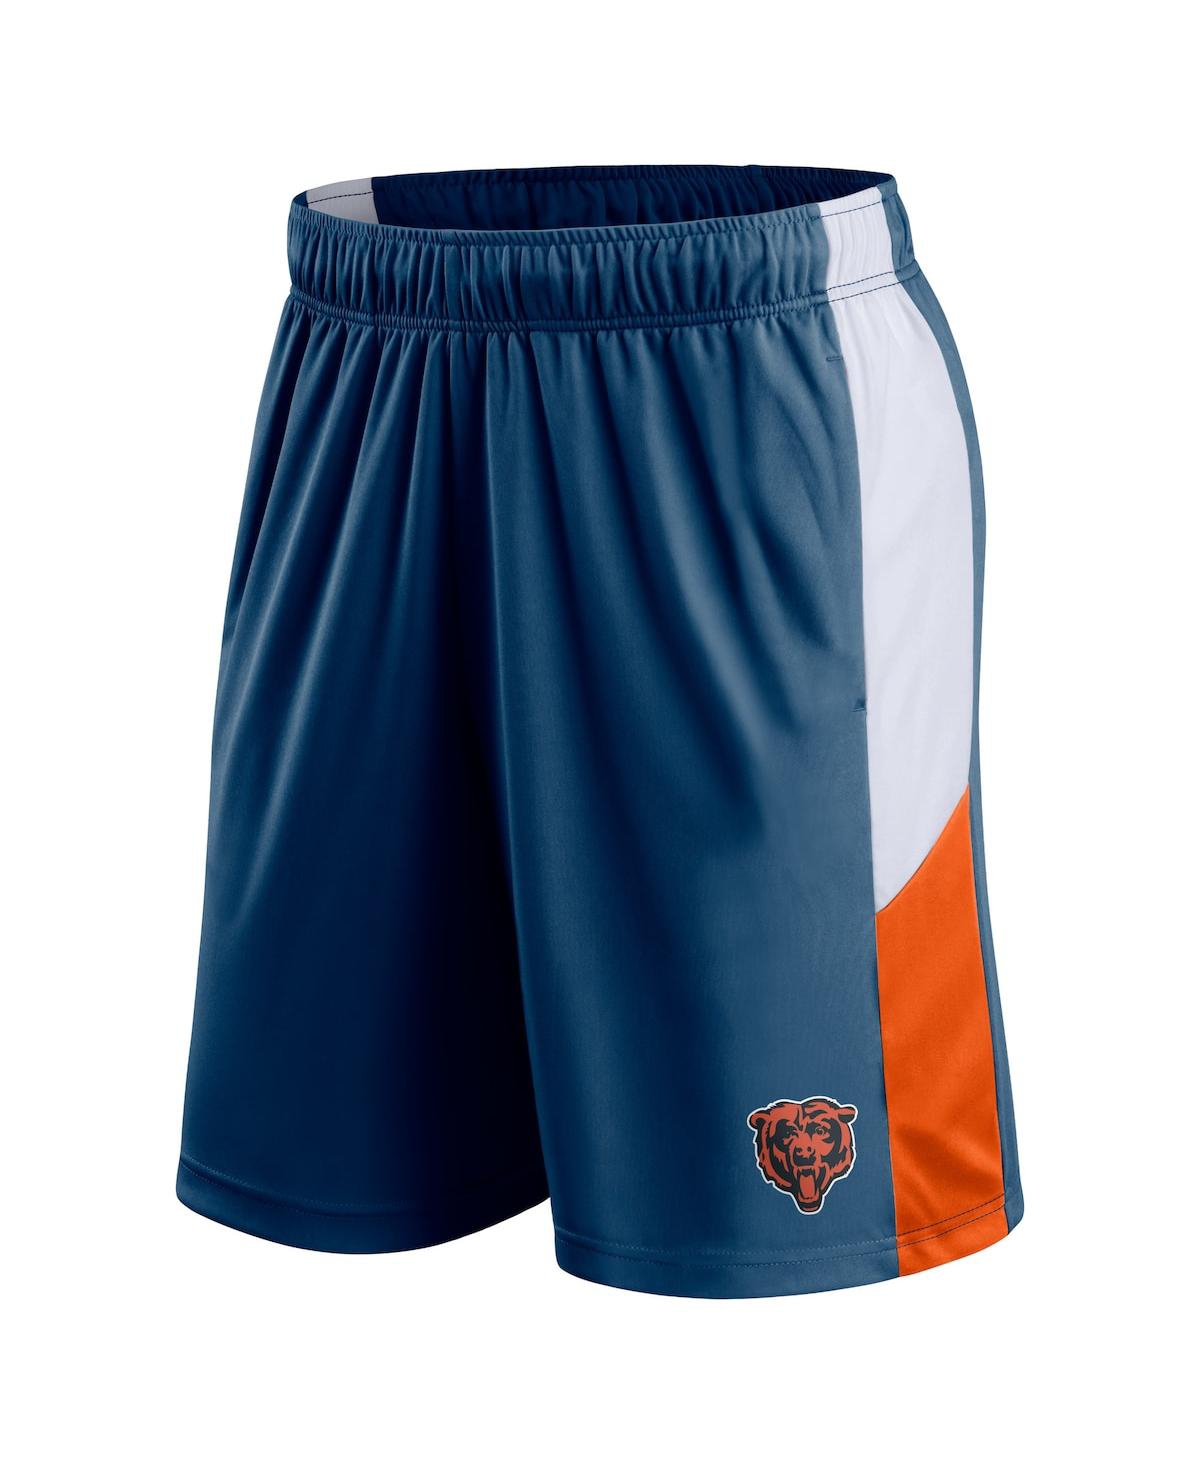 Shop Fanatics Men's  Navy Chicago Bears Prep Colorblock Shorts